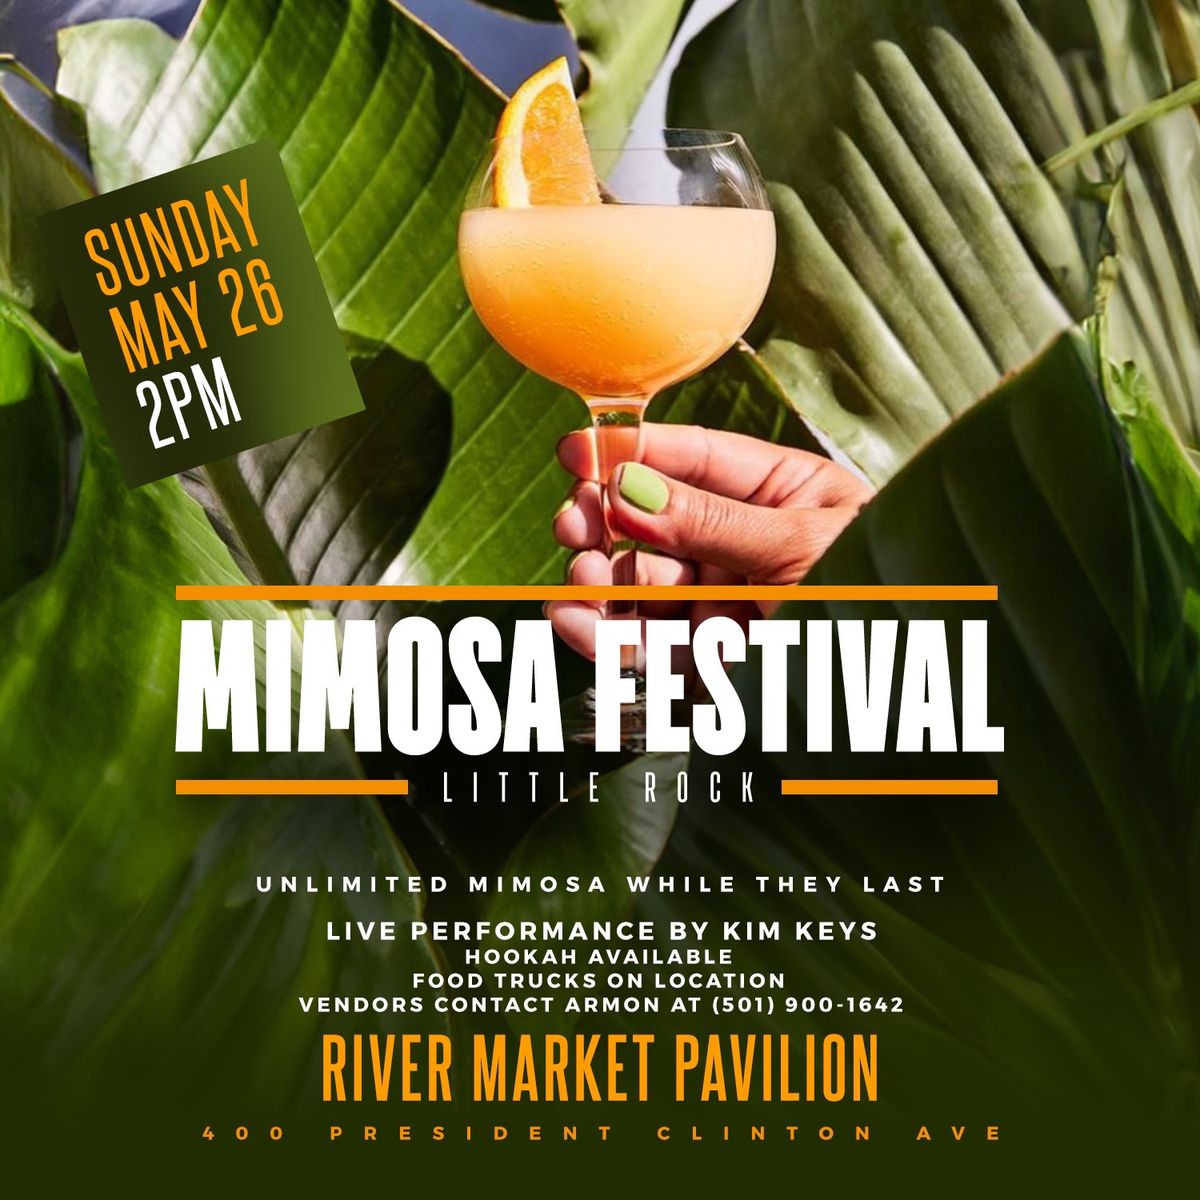 2nd Annual Mimosa Festival Little Rock 